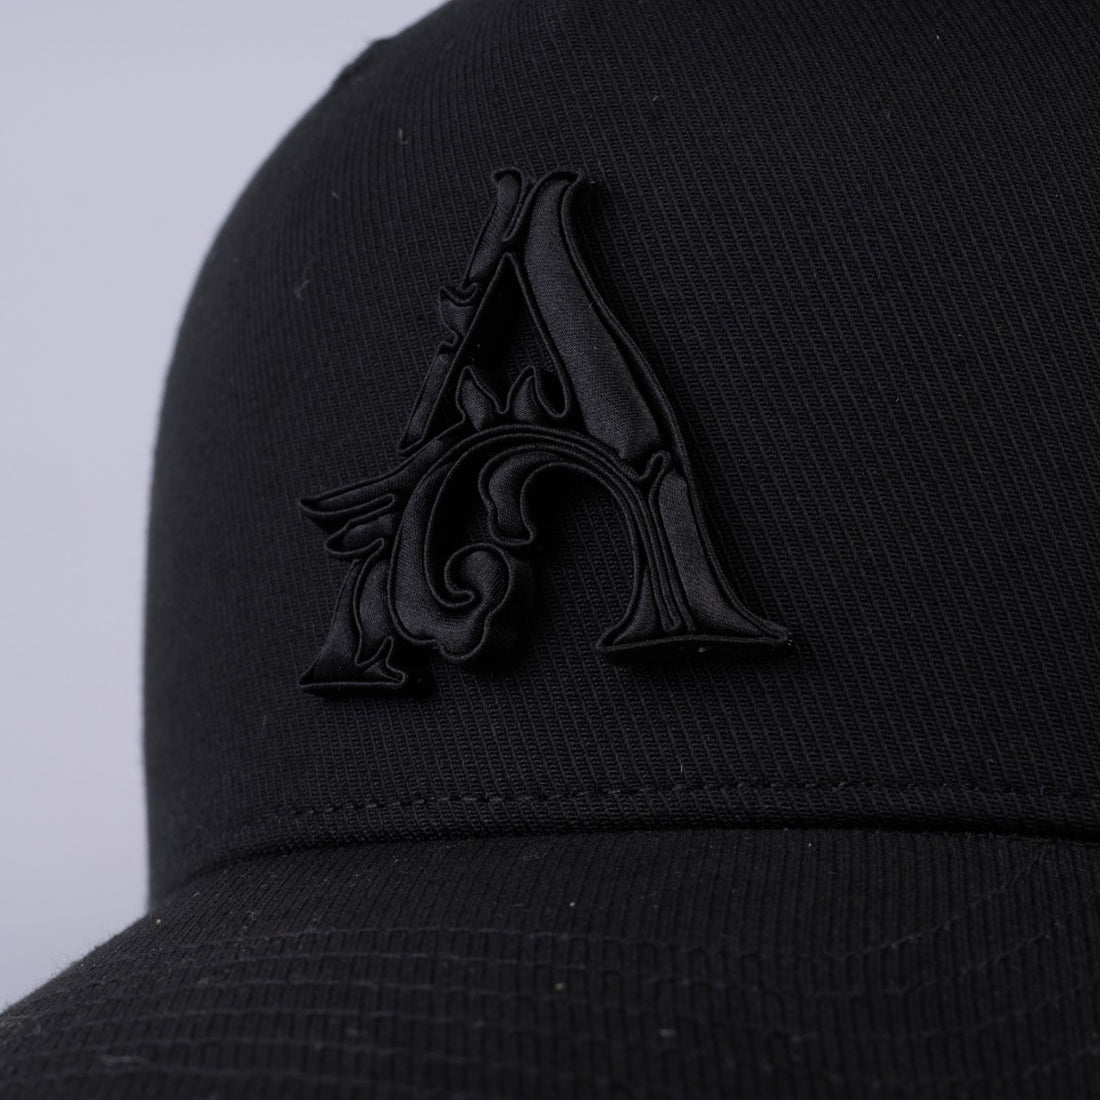 Avator Black Warrior baseball cap